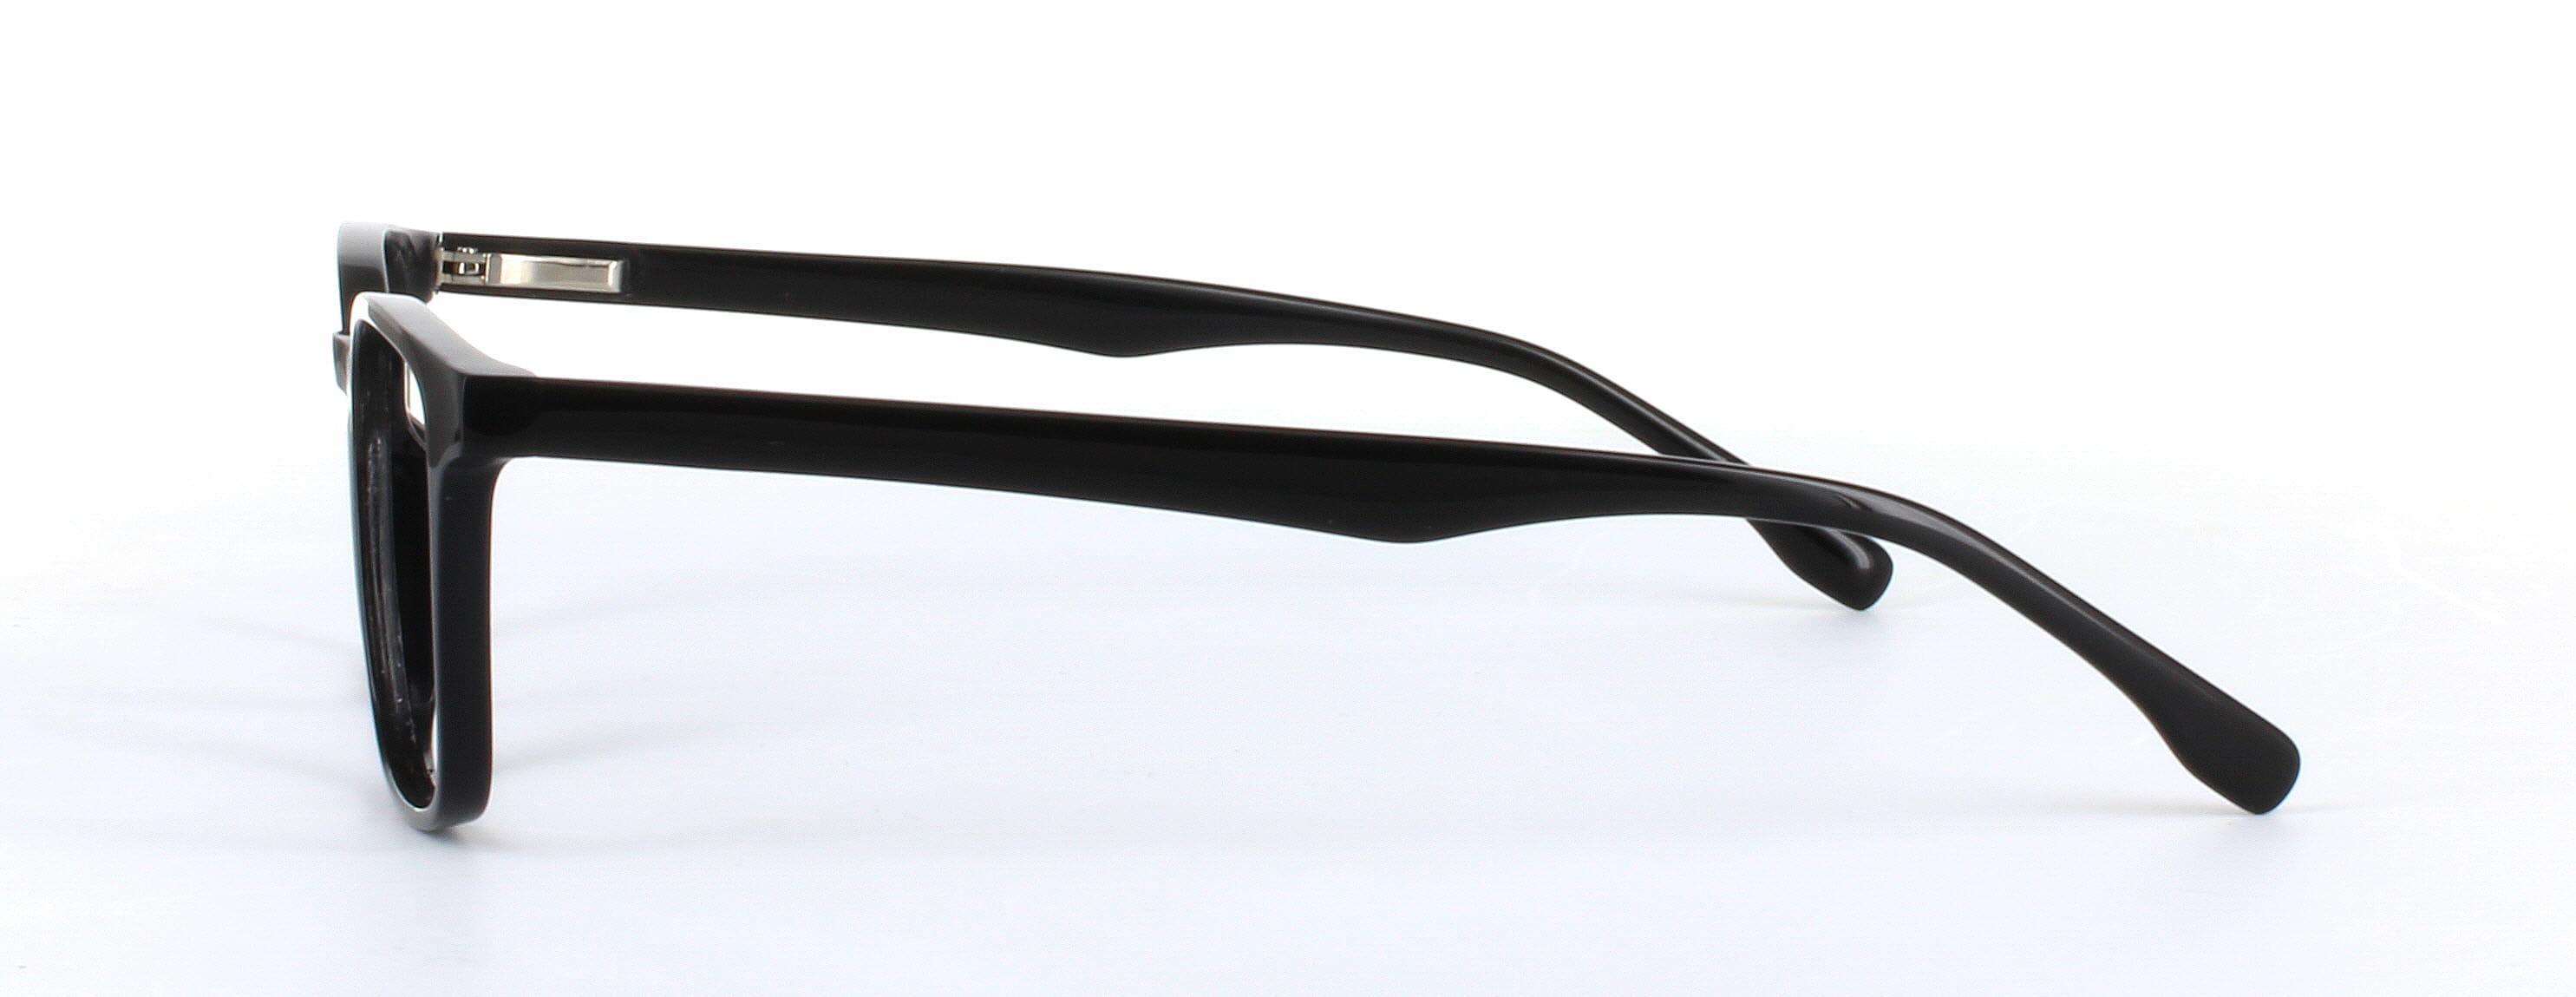 Hodson Black Full Rim Acetate Glasses - Image View 2